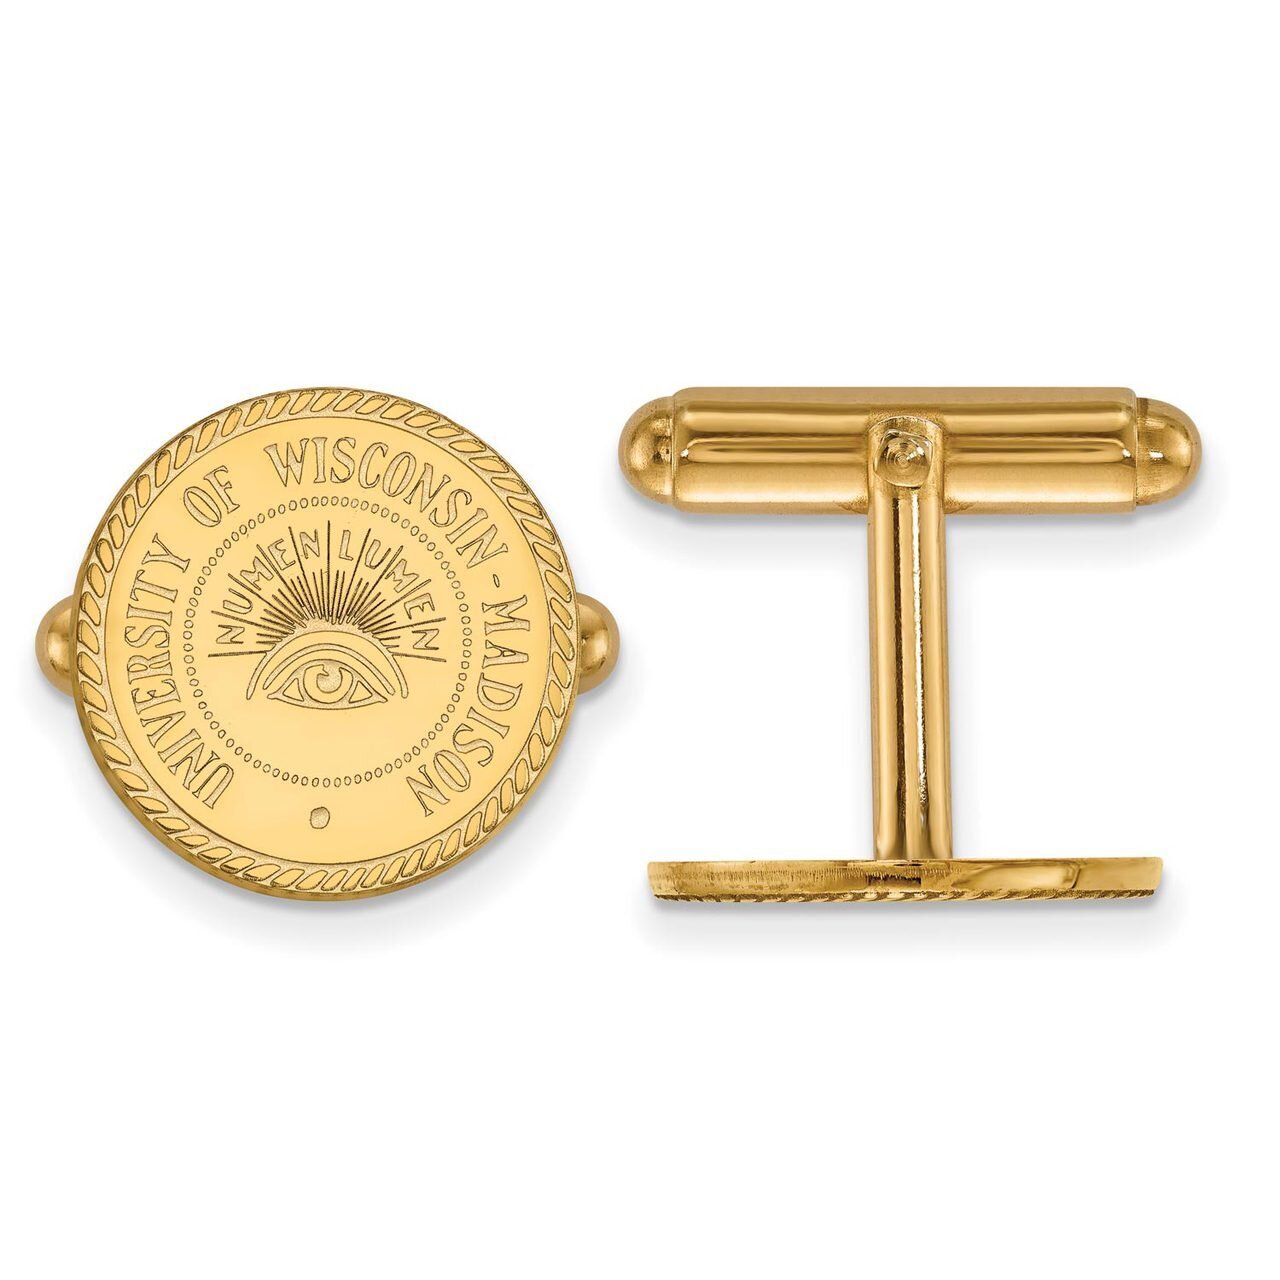 University of Wisconsin Crest Cufflinks Gold-plated Silver GP082UWI